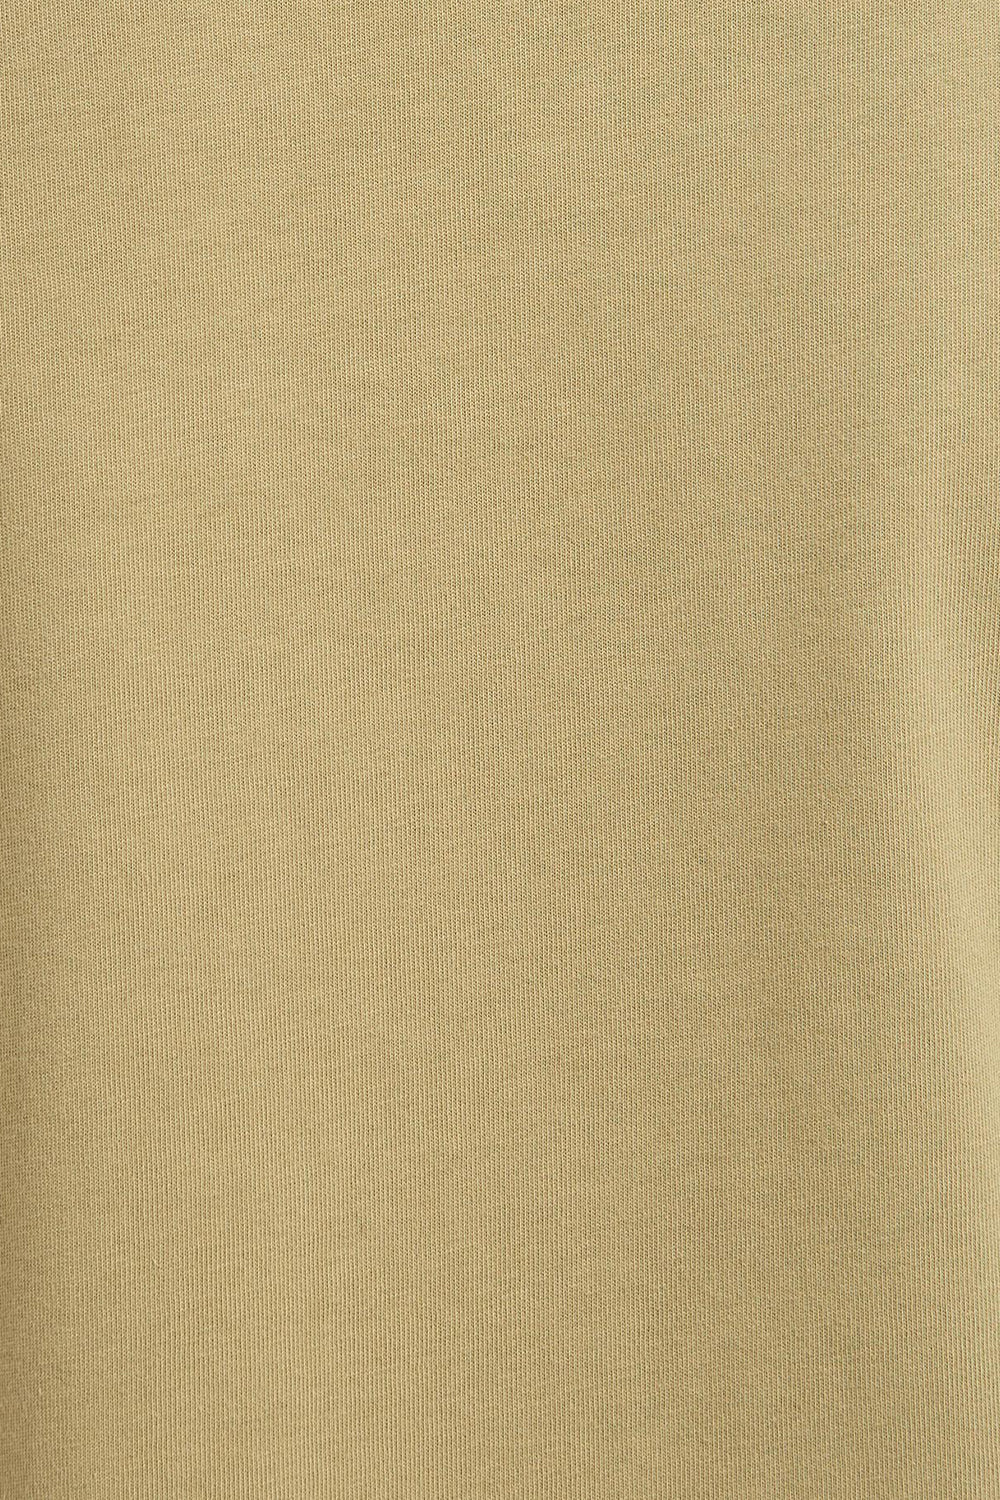 Barbour Williams Pocket T-Shirt (Bleached Olive) | Number Six